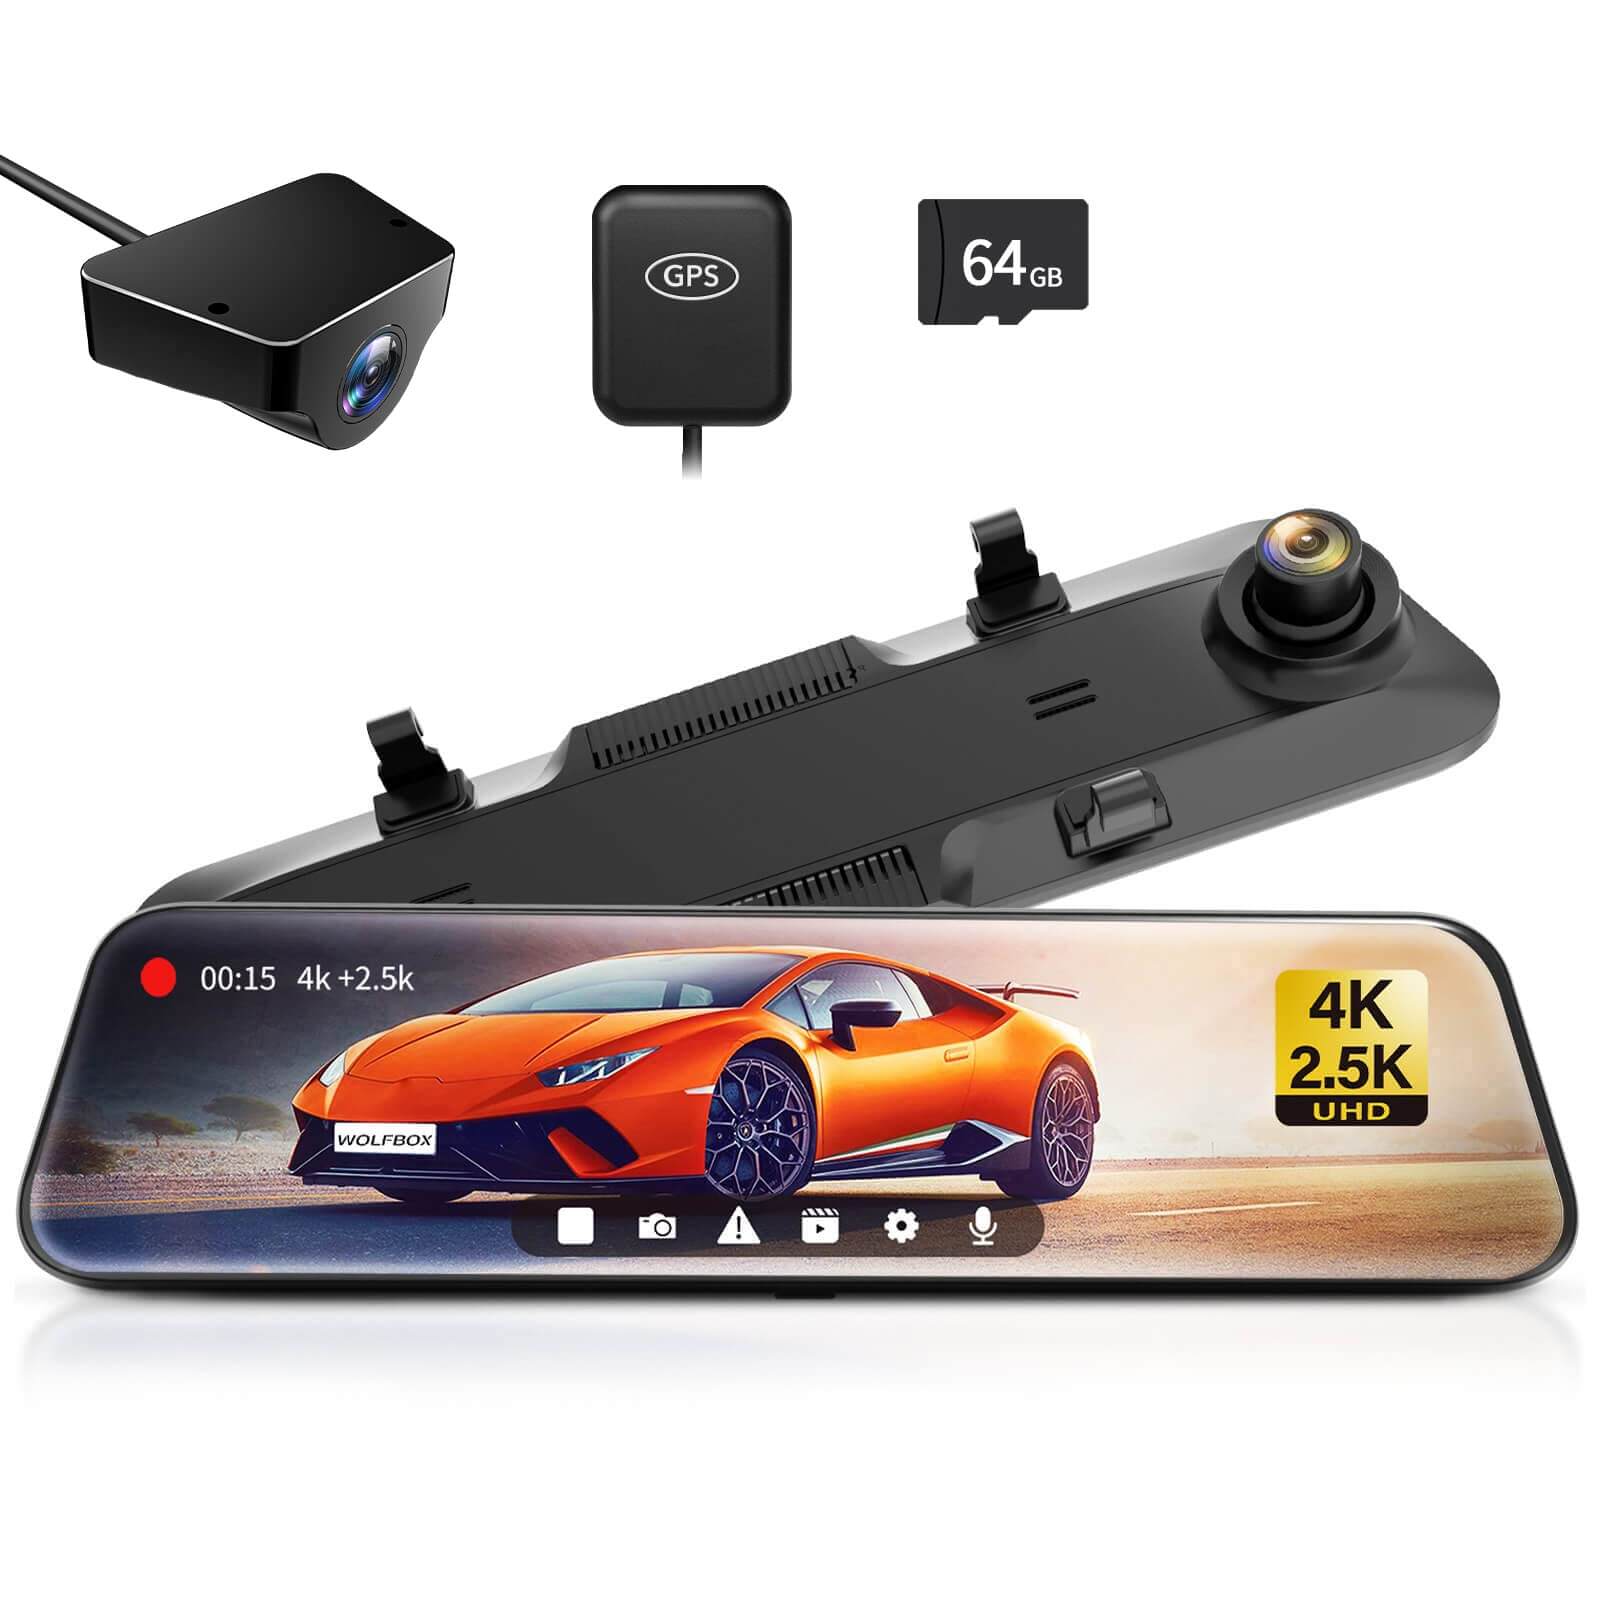 Wolfbox G900 4K+2.5K Touch Screen Parking Monitoring Dash Cam Smart Mirror